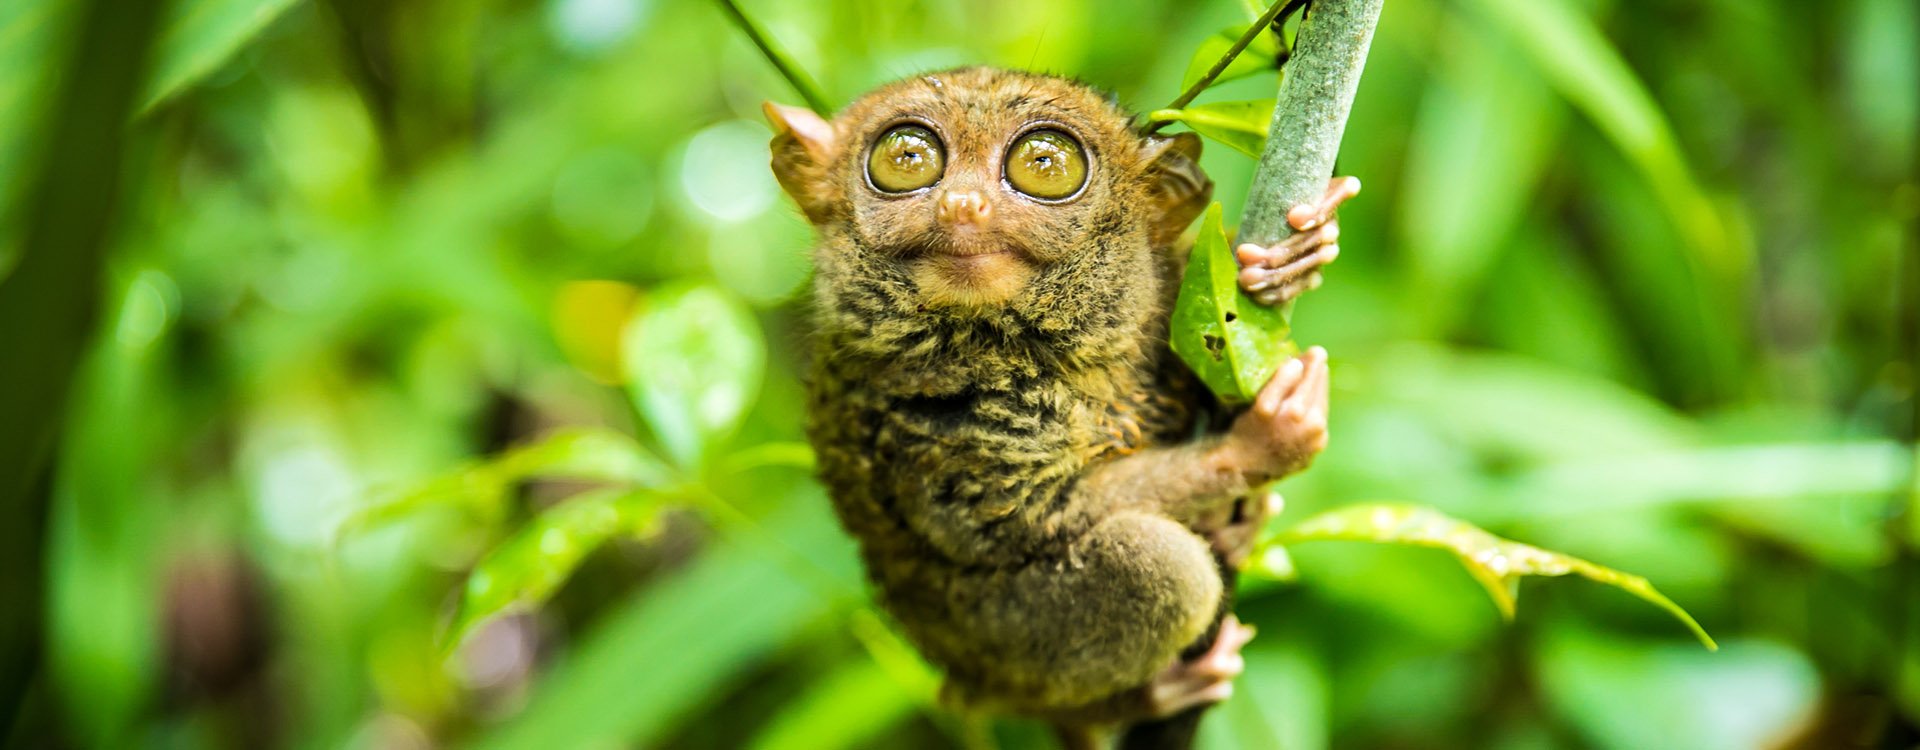 The Philippine tarsier (Carlito syrichta), tarsier endemic to the Philippines